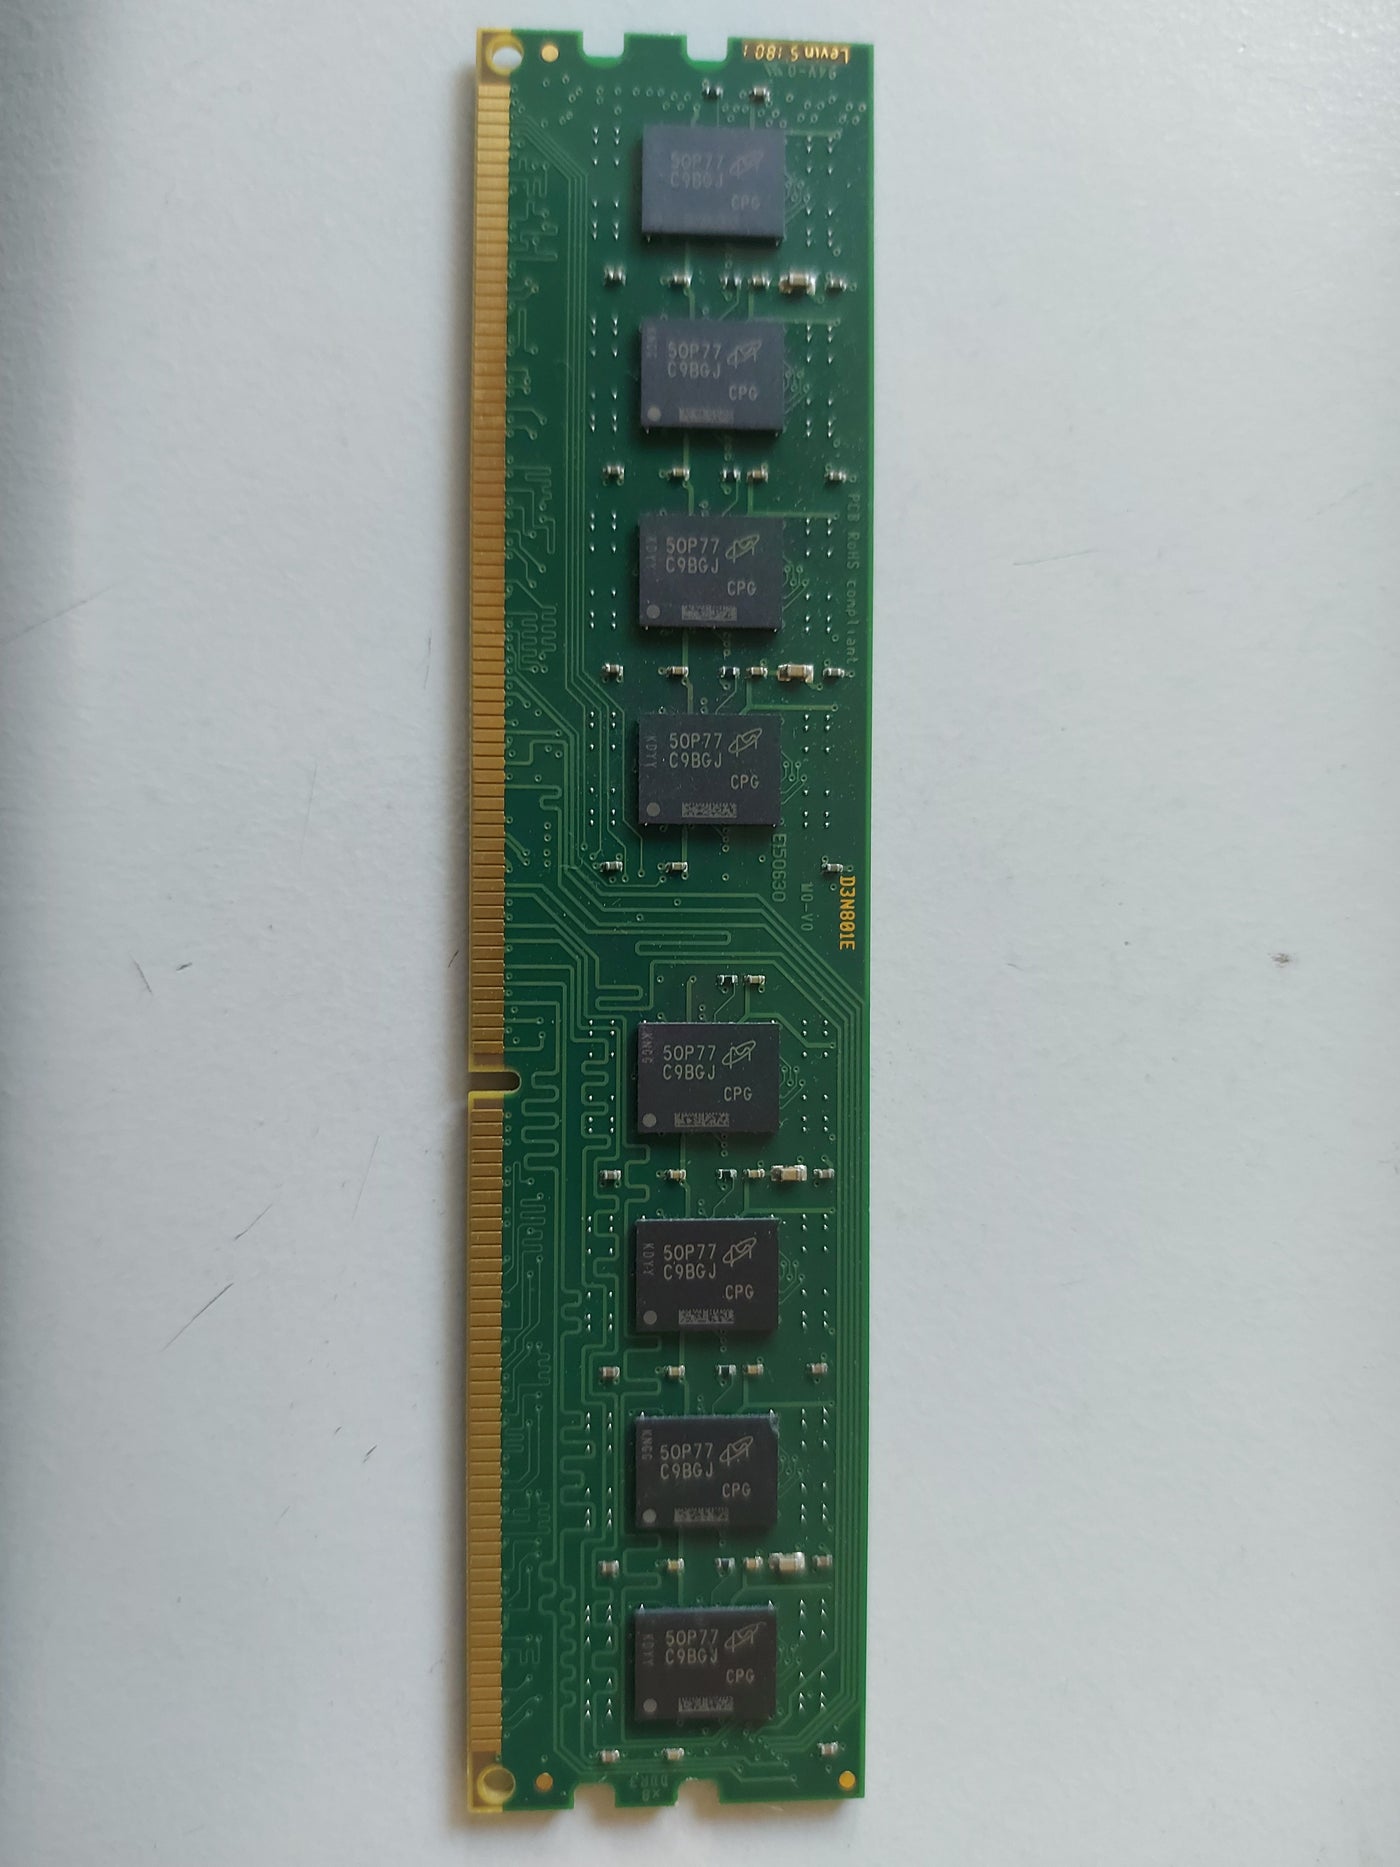 Crucial 8GB PC3-12800 DDR3-1600MHz nonECC CL11 240Pin DIMM CT102464BA160B.C16FPR